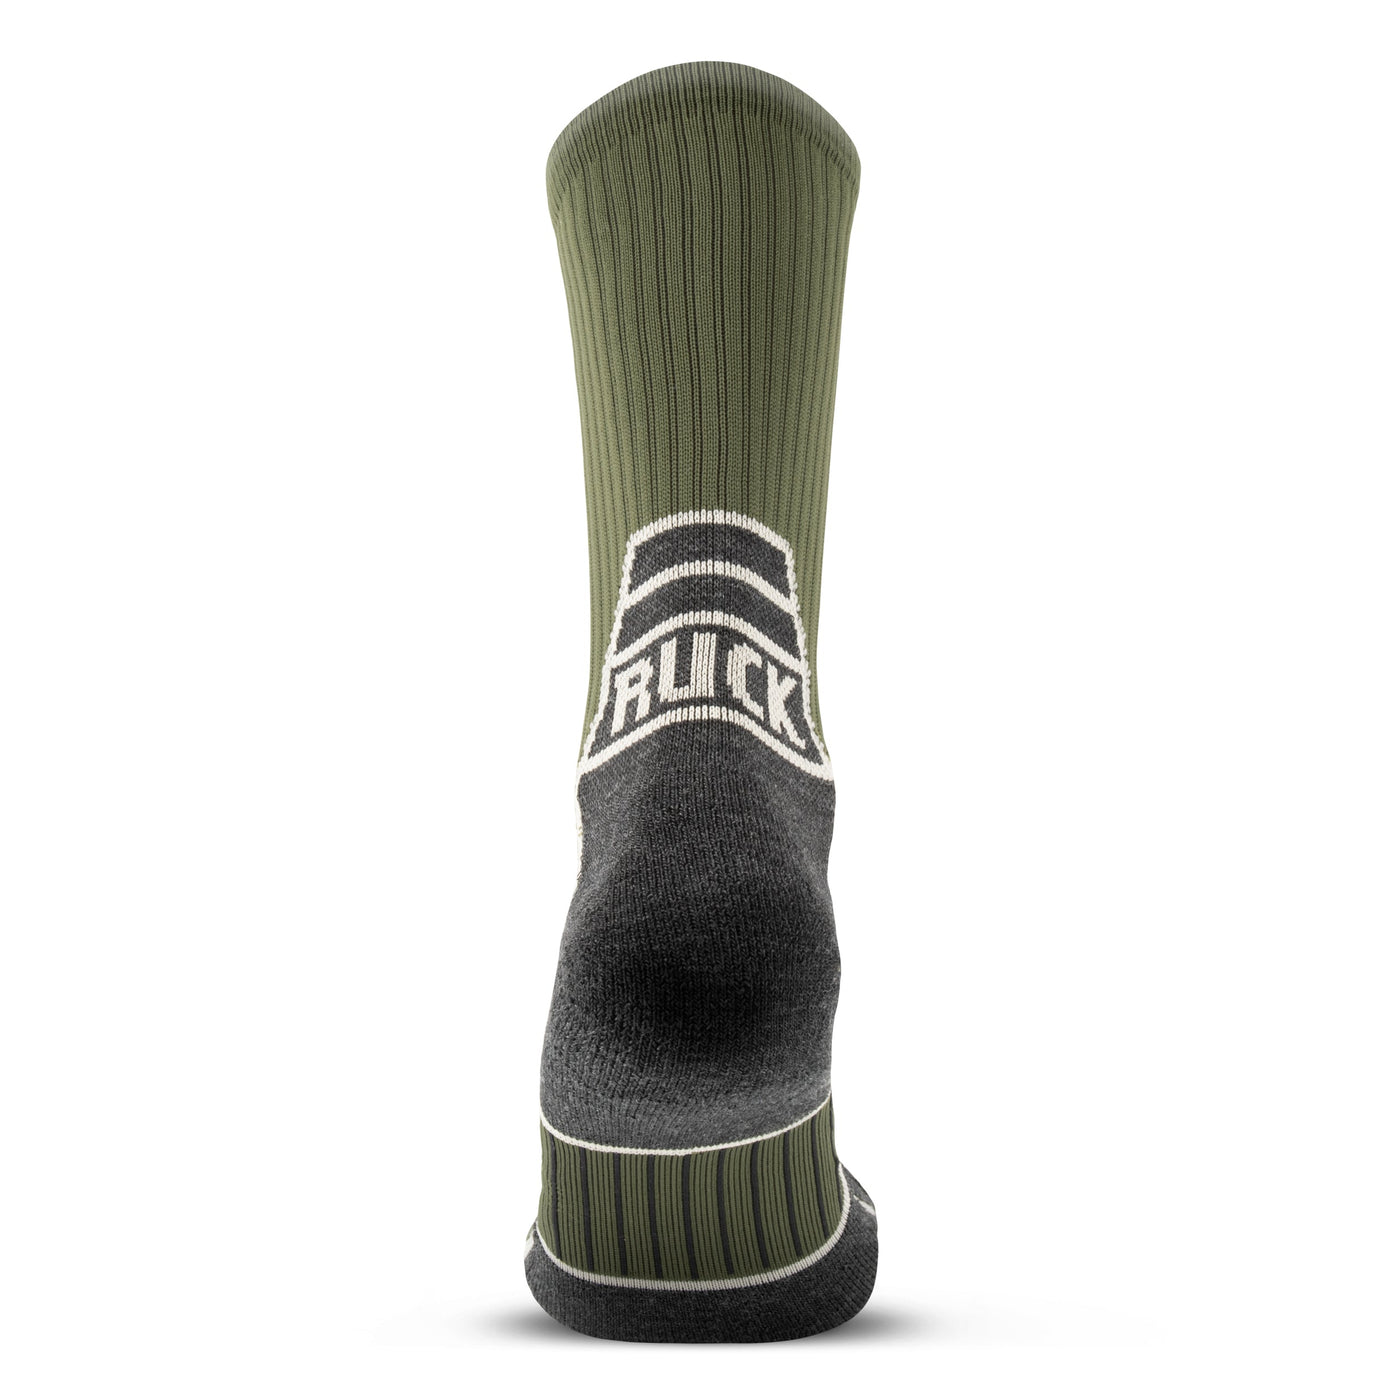 MudGear Ruck Sock (Army Green)